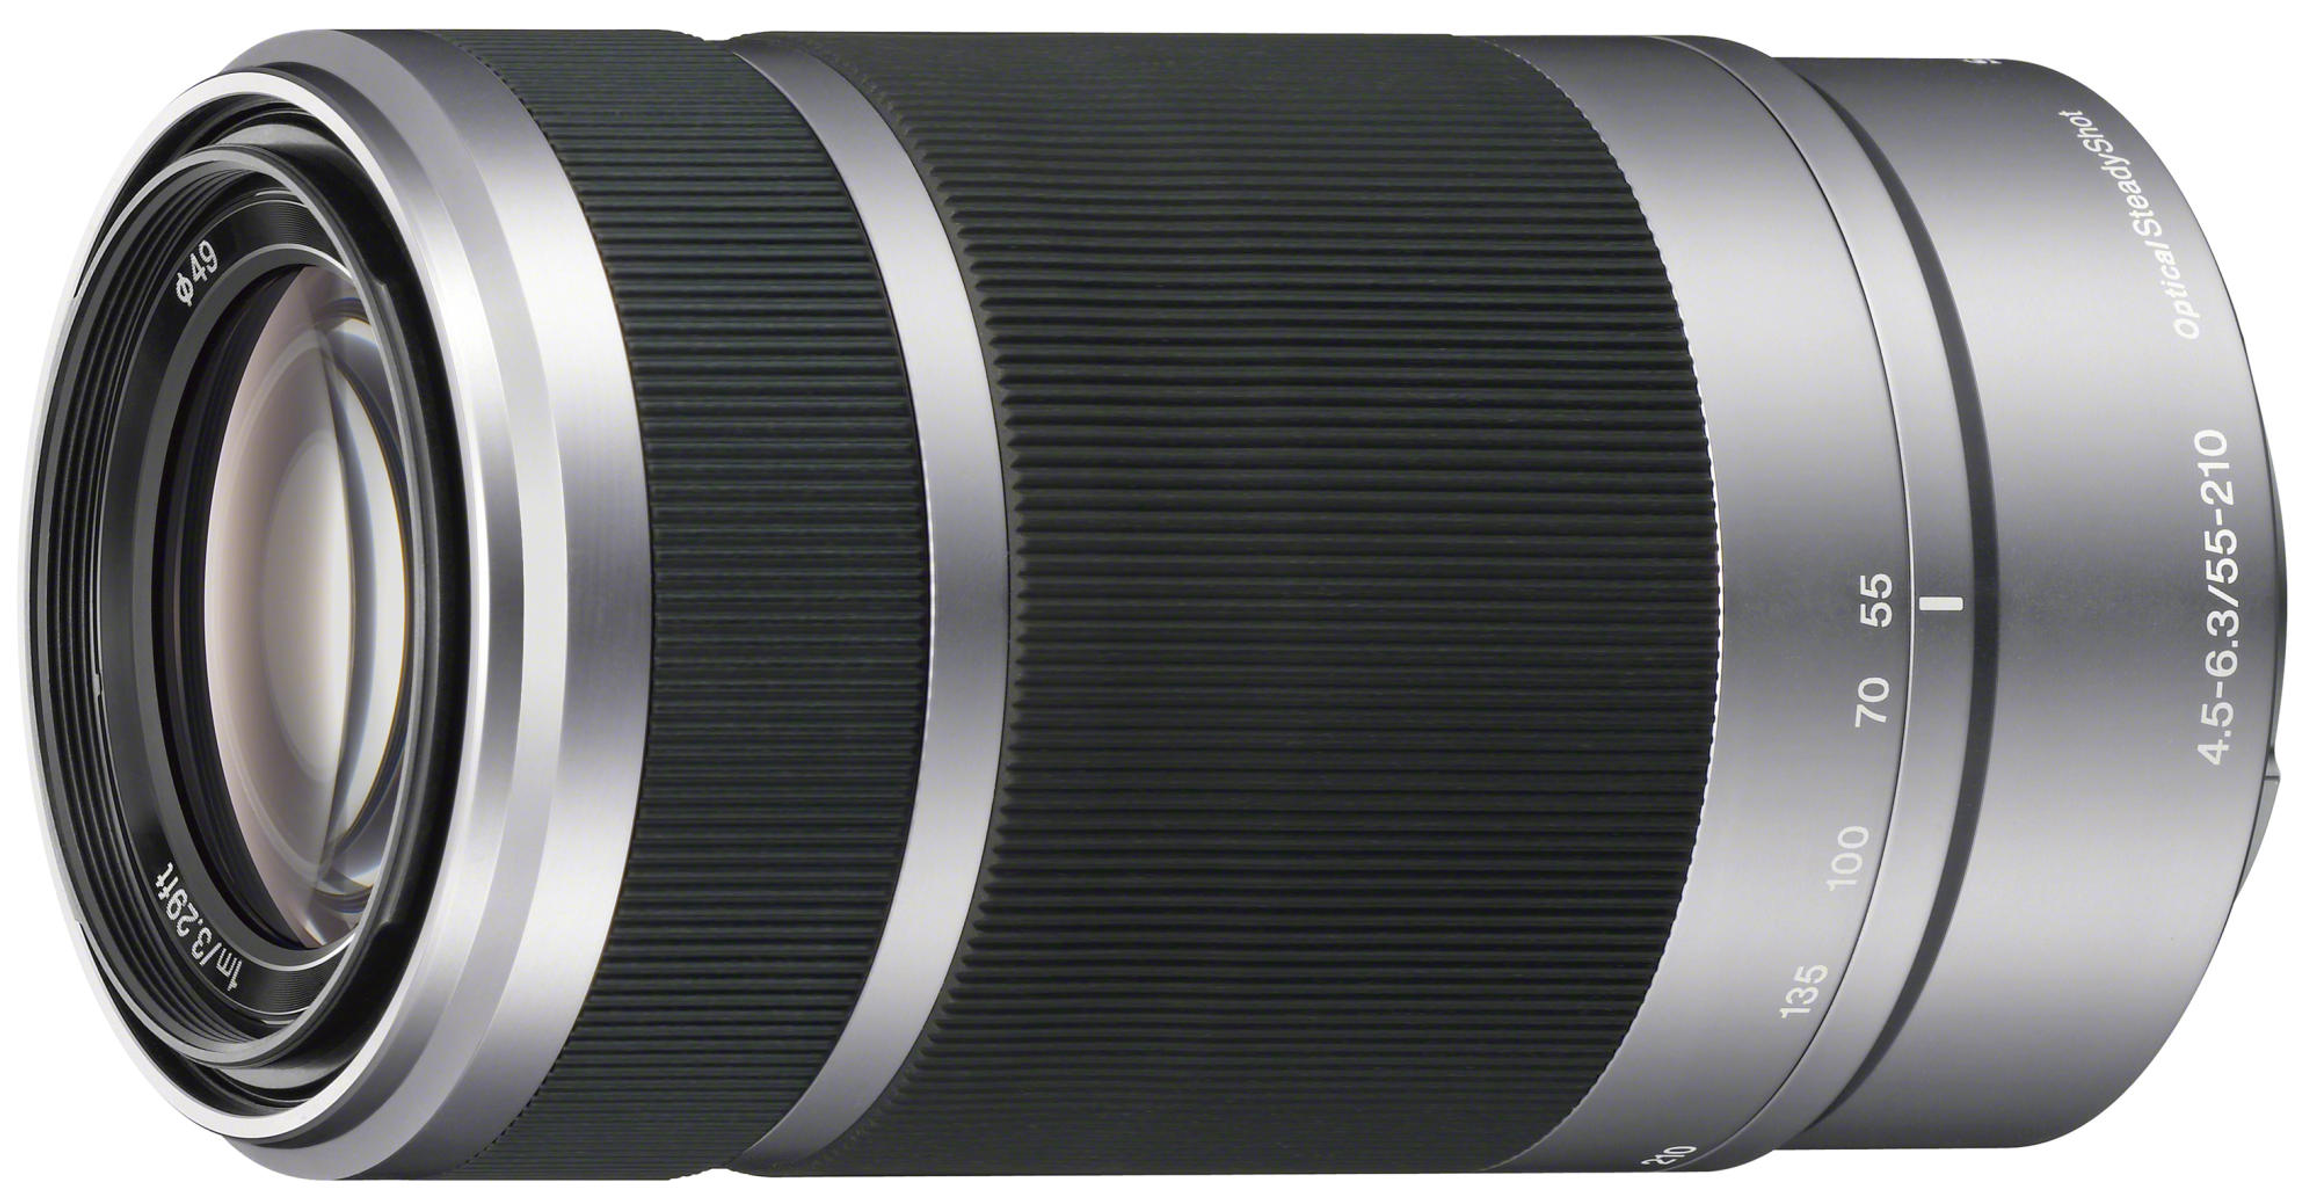 SONY SEL 55210 OSS, SILBER Circulare mm Sony Silber) für - F4,5-6,3/55-210MM Blende 55 f/4.5-6.3 (Objektiv E-Mount, mm 210